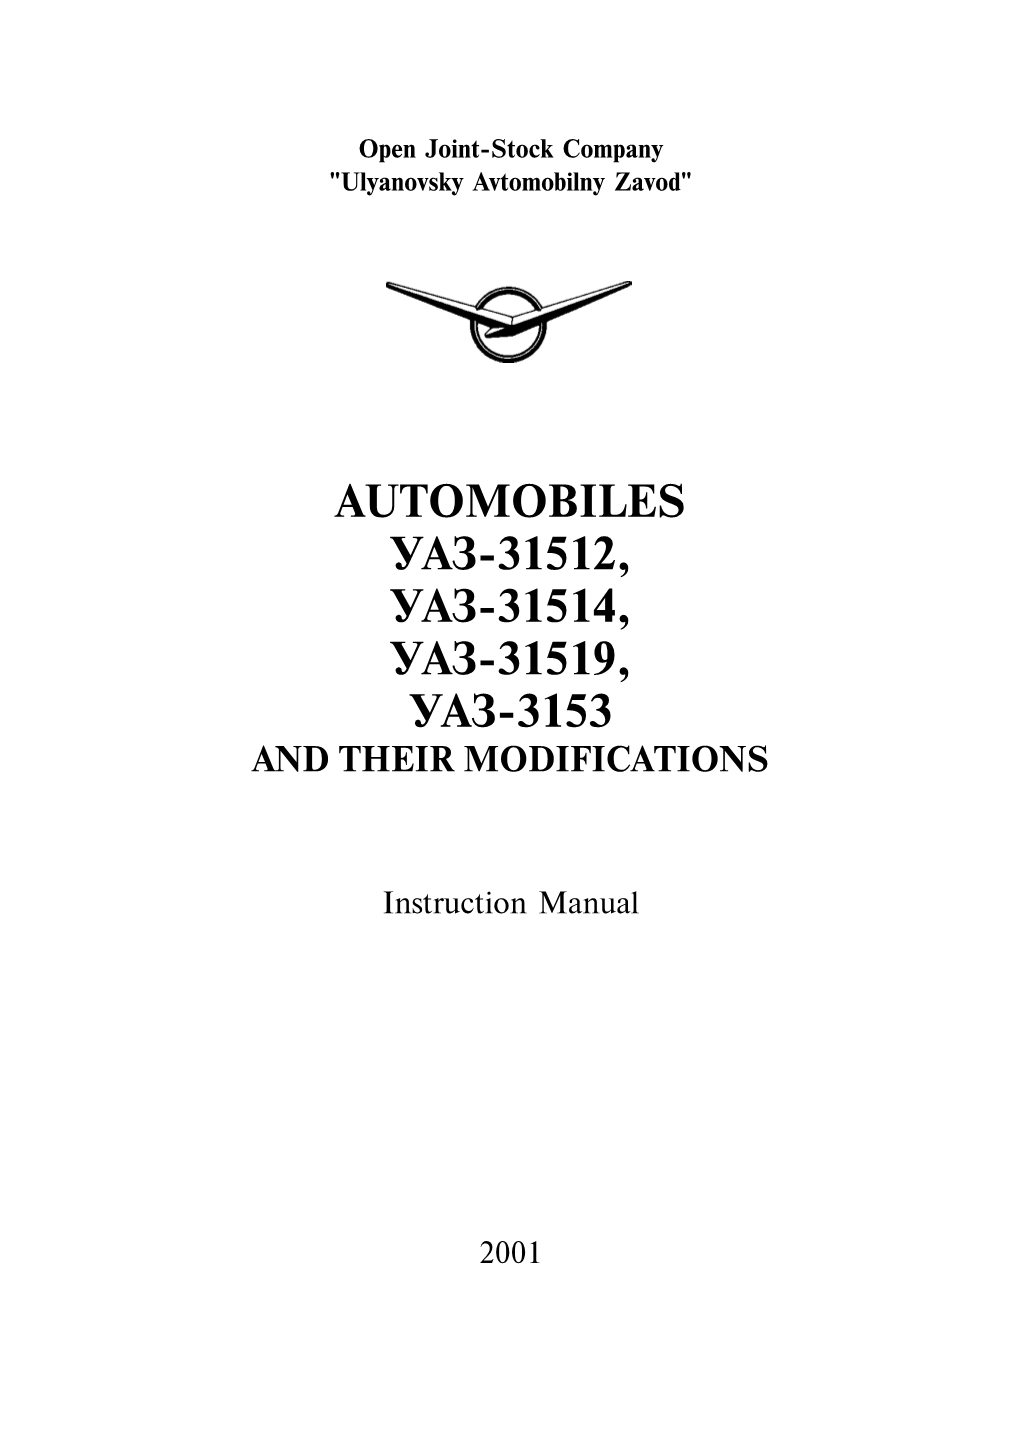 Instruction Manual (UAZ-31512, UAZ-31514, UAZ-31519, UAZ-3153)